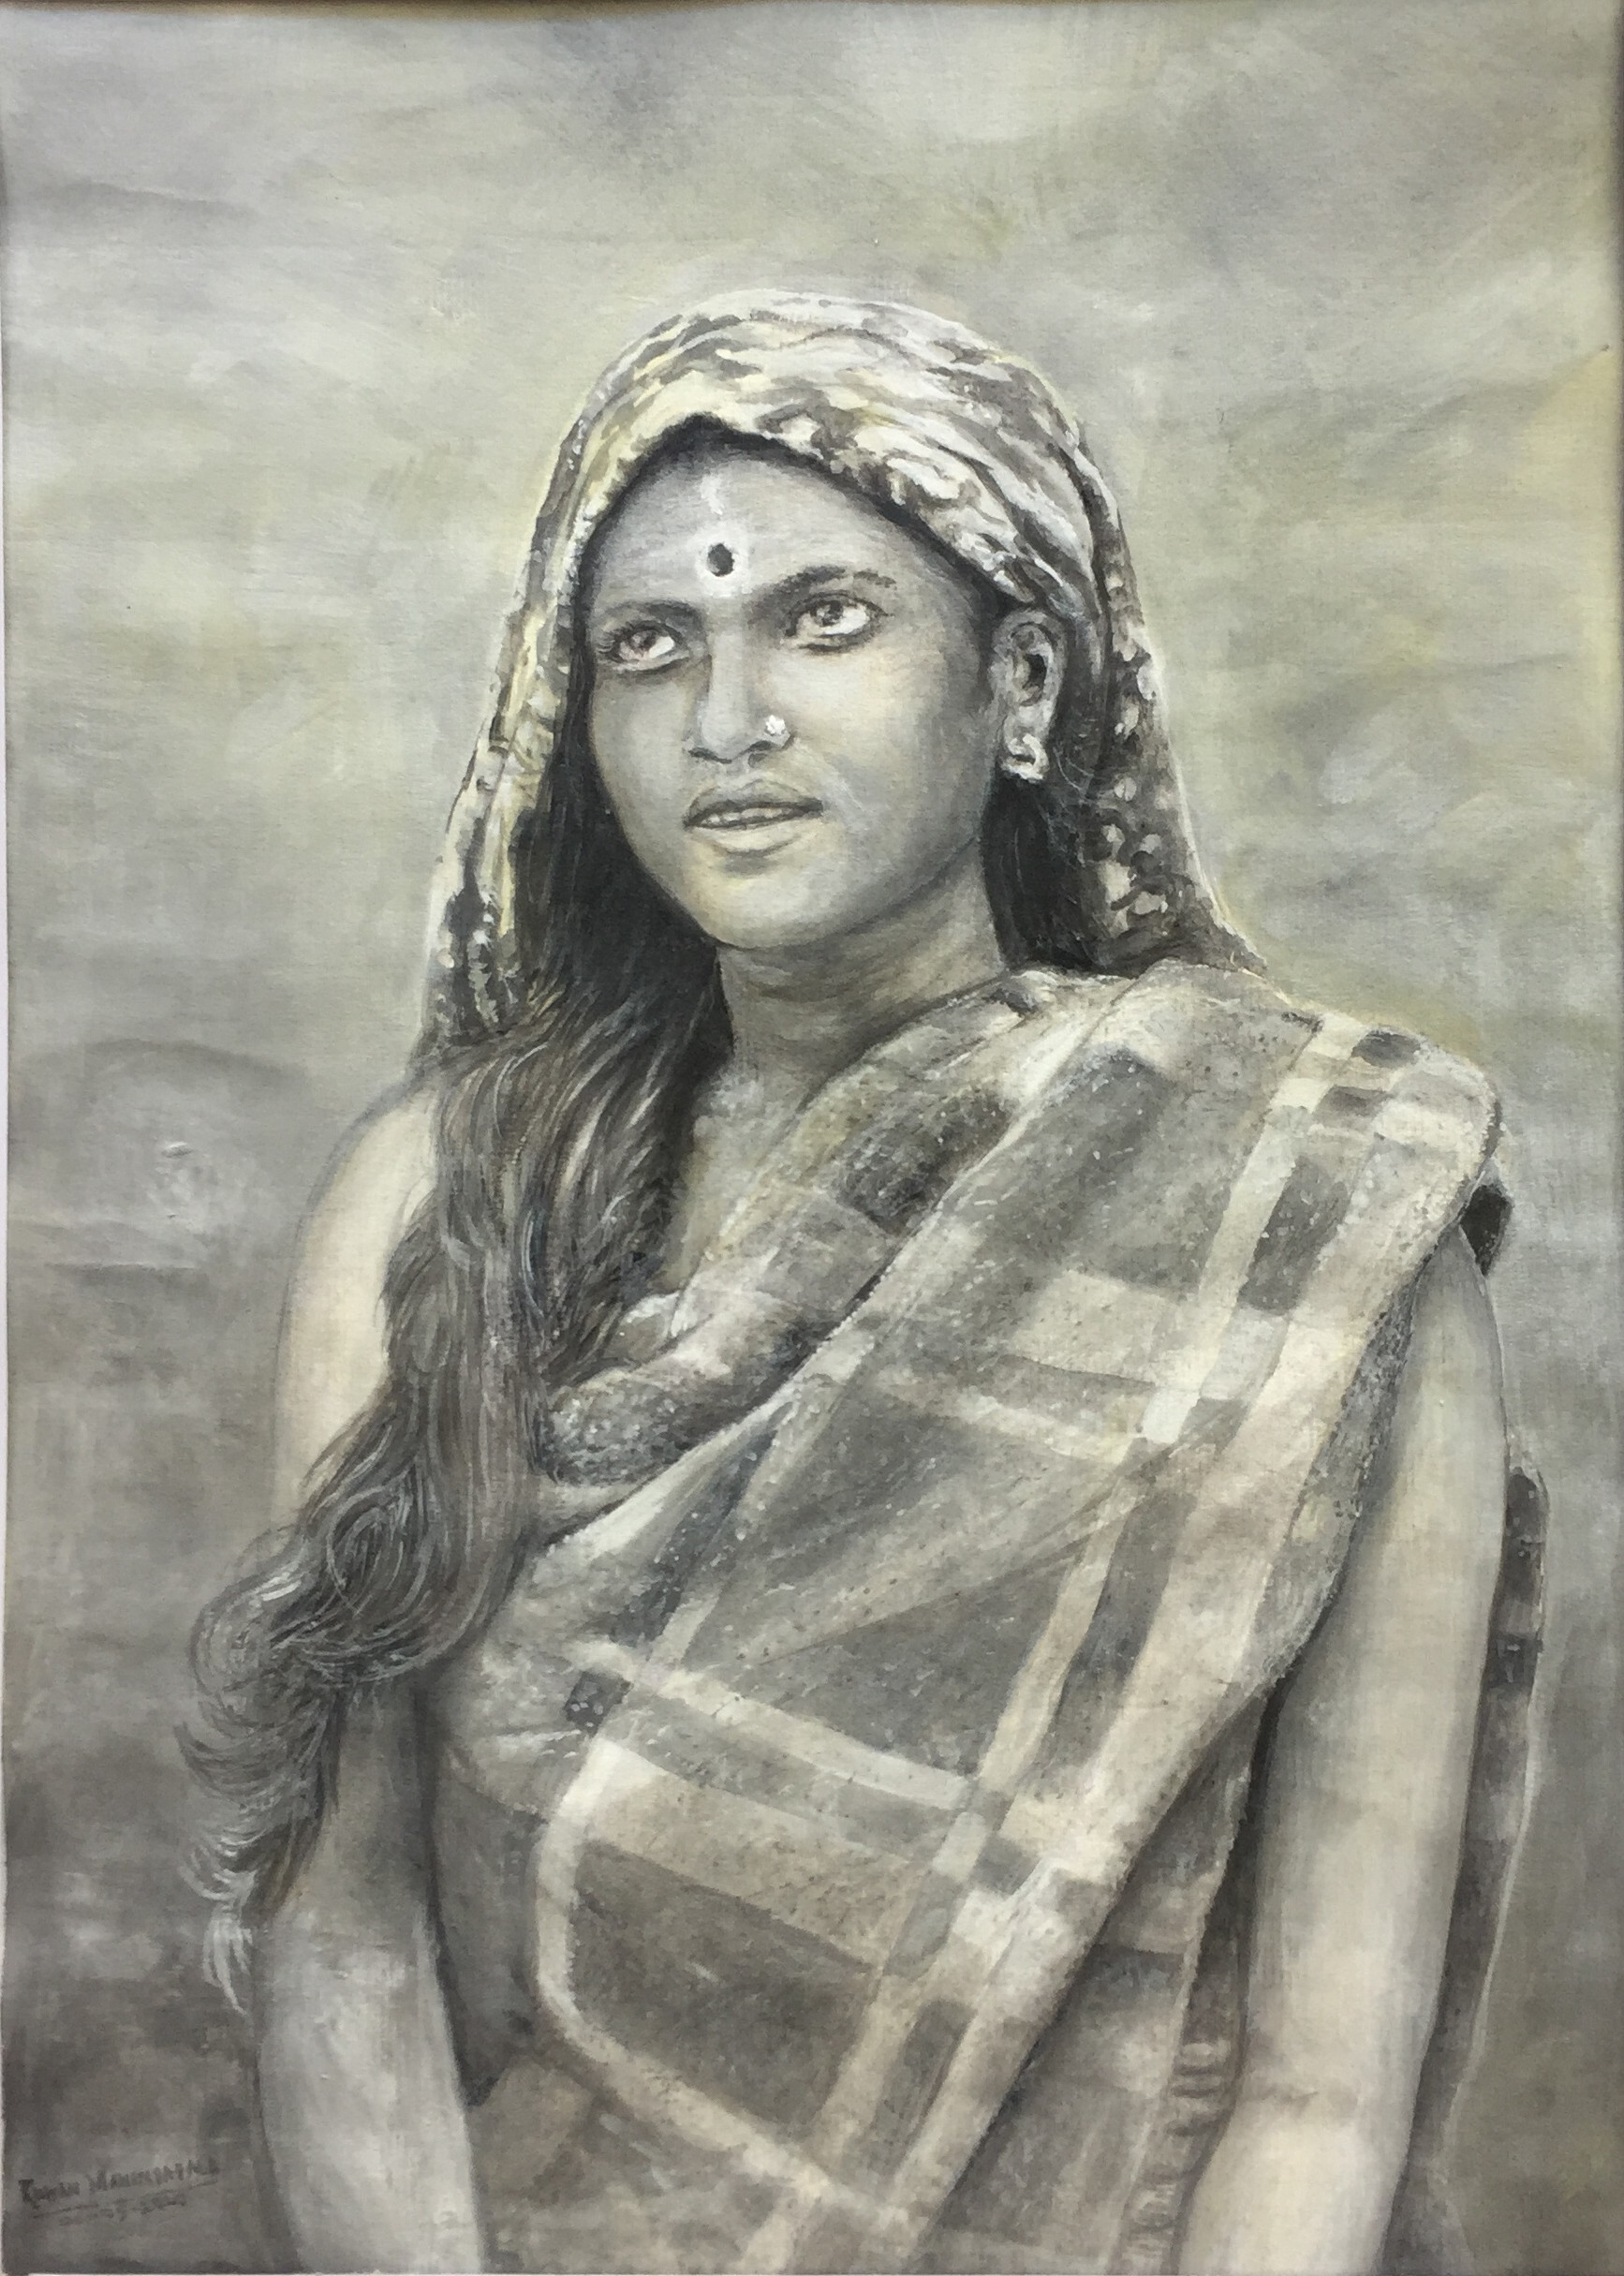 Ceylon Young Tamil Woman by RUWAN MAHINDAPALA